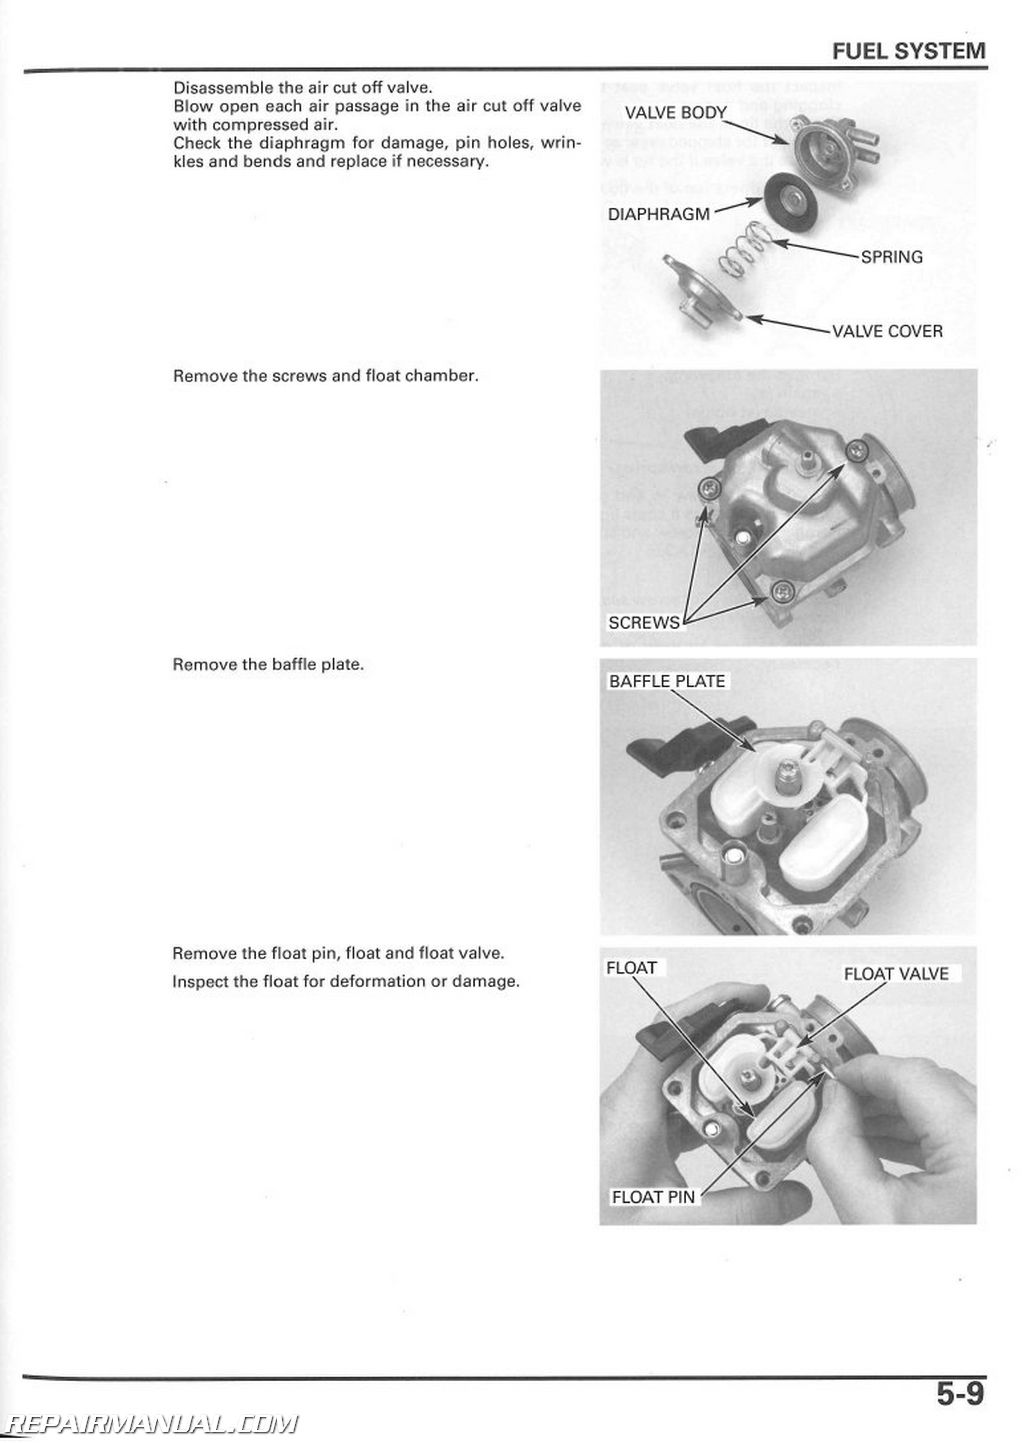 Home / ATV &amp; Motorcycle Repair Manuals / Honda Motorcycle Manuals ...